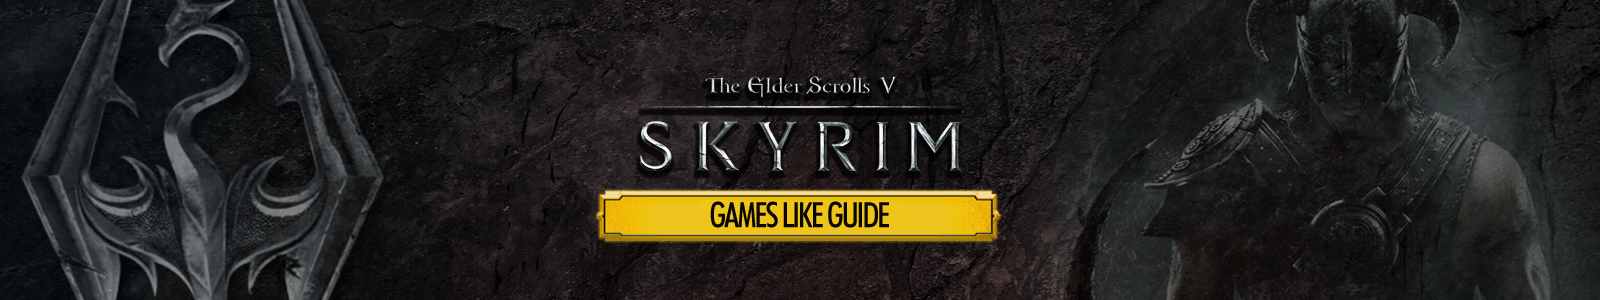 The Elder Scrolls 5 Skyrim games like guide